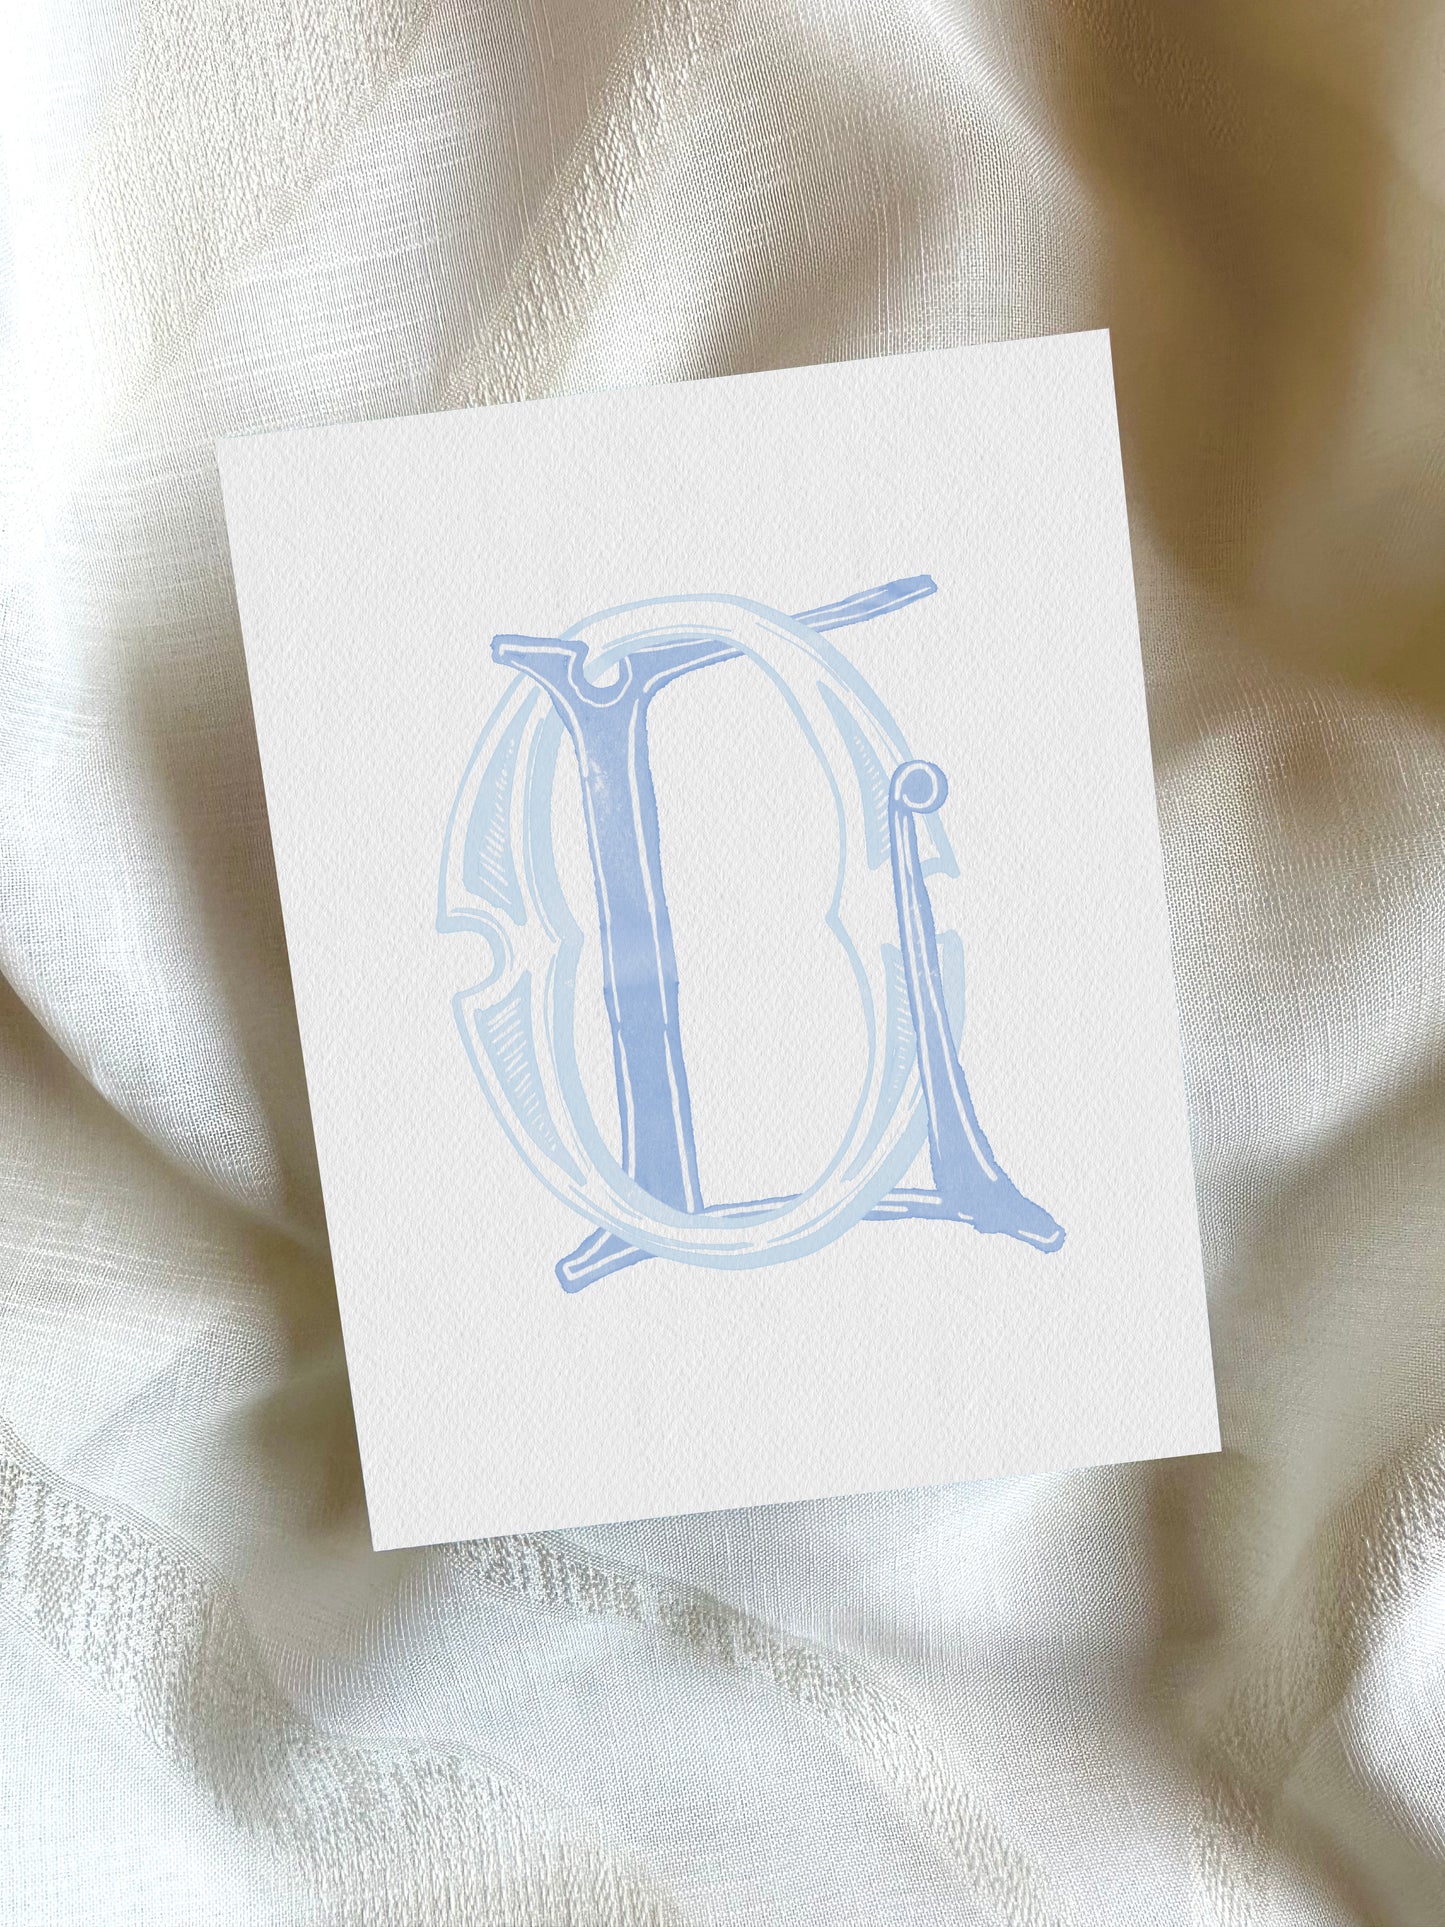 2 Letter Monogram with Letters LO OL | Digital Download - Wedding Monogram SVG, Personal Logo, Wedding Logo for Wedding Invitations The Wedding Crest Lab